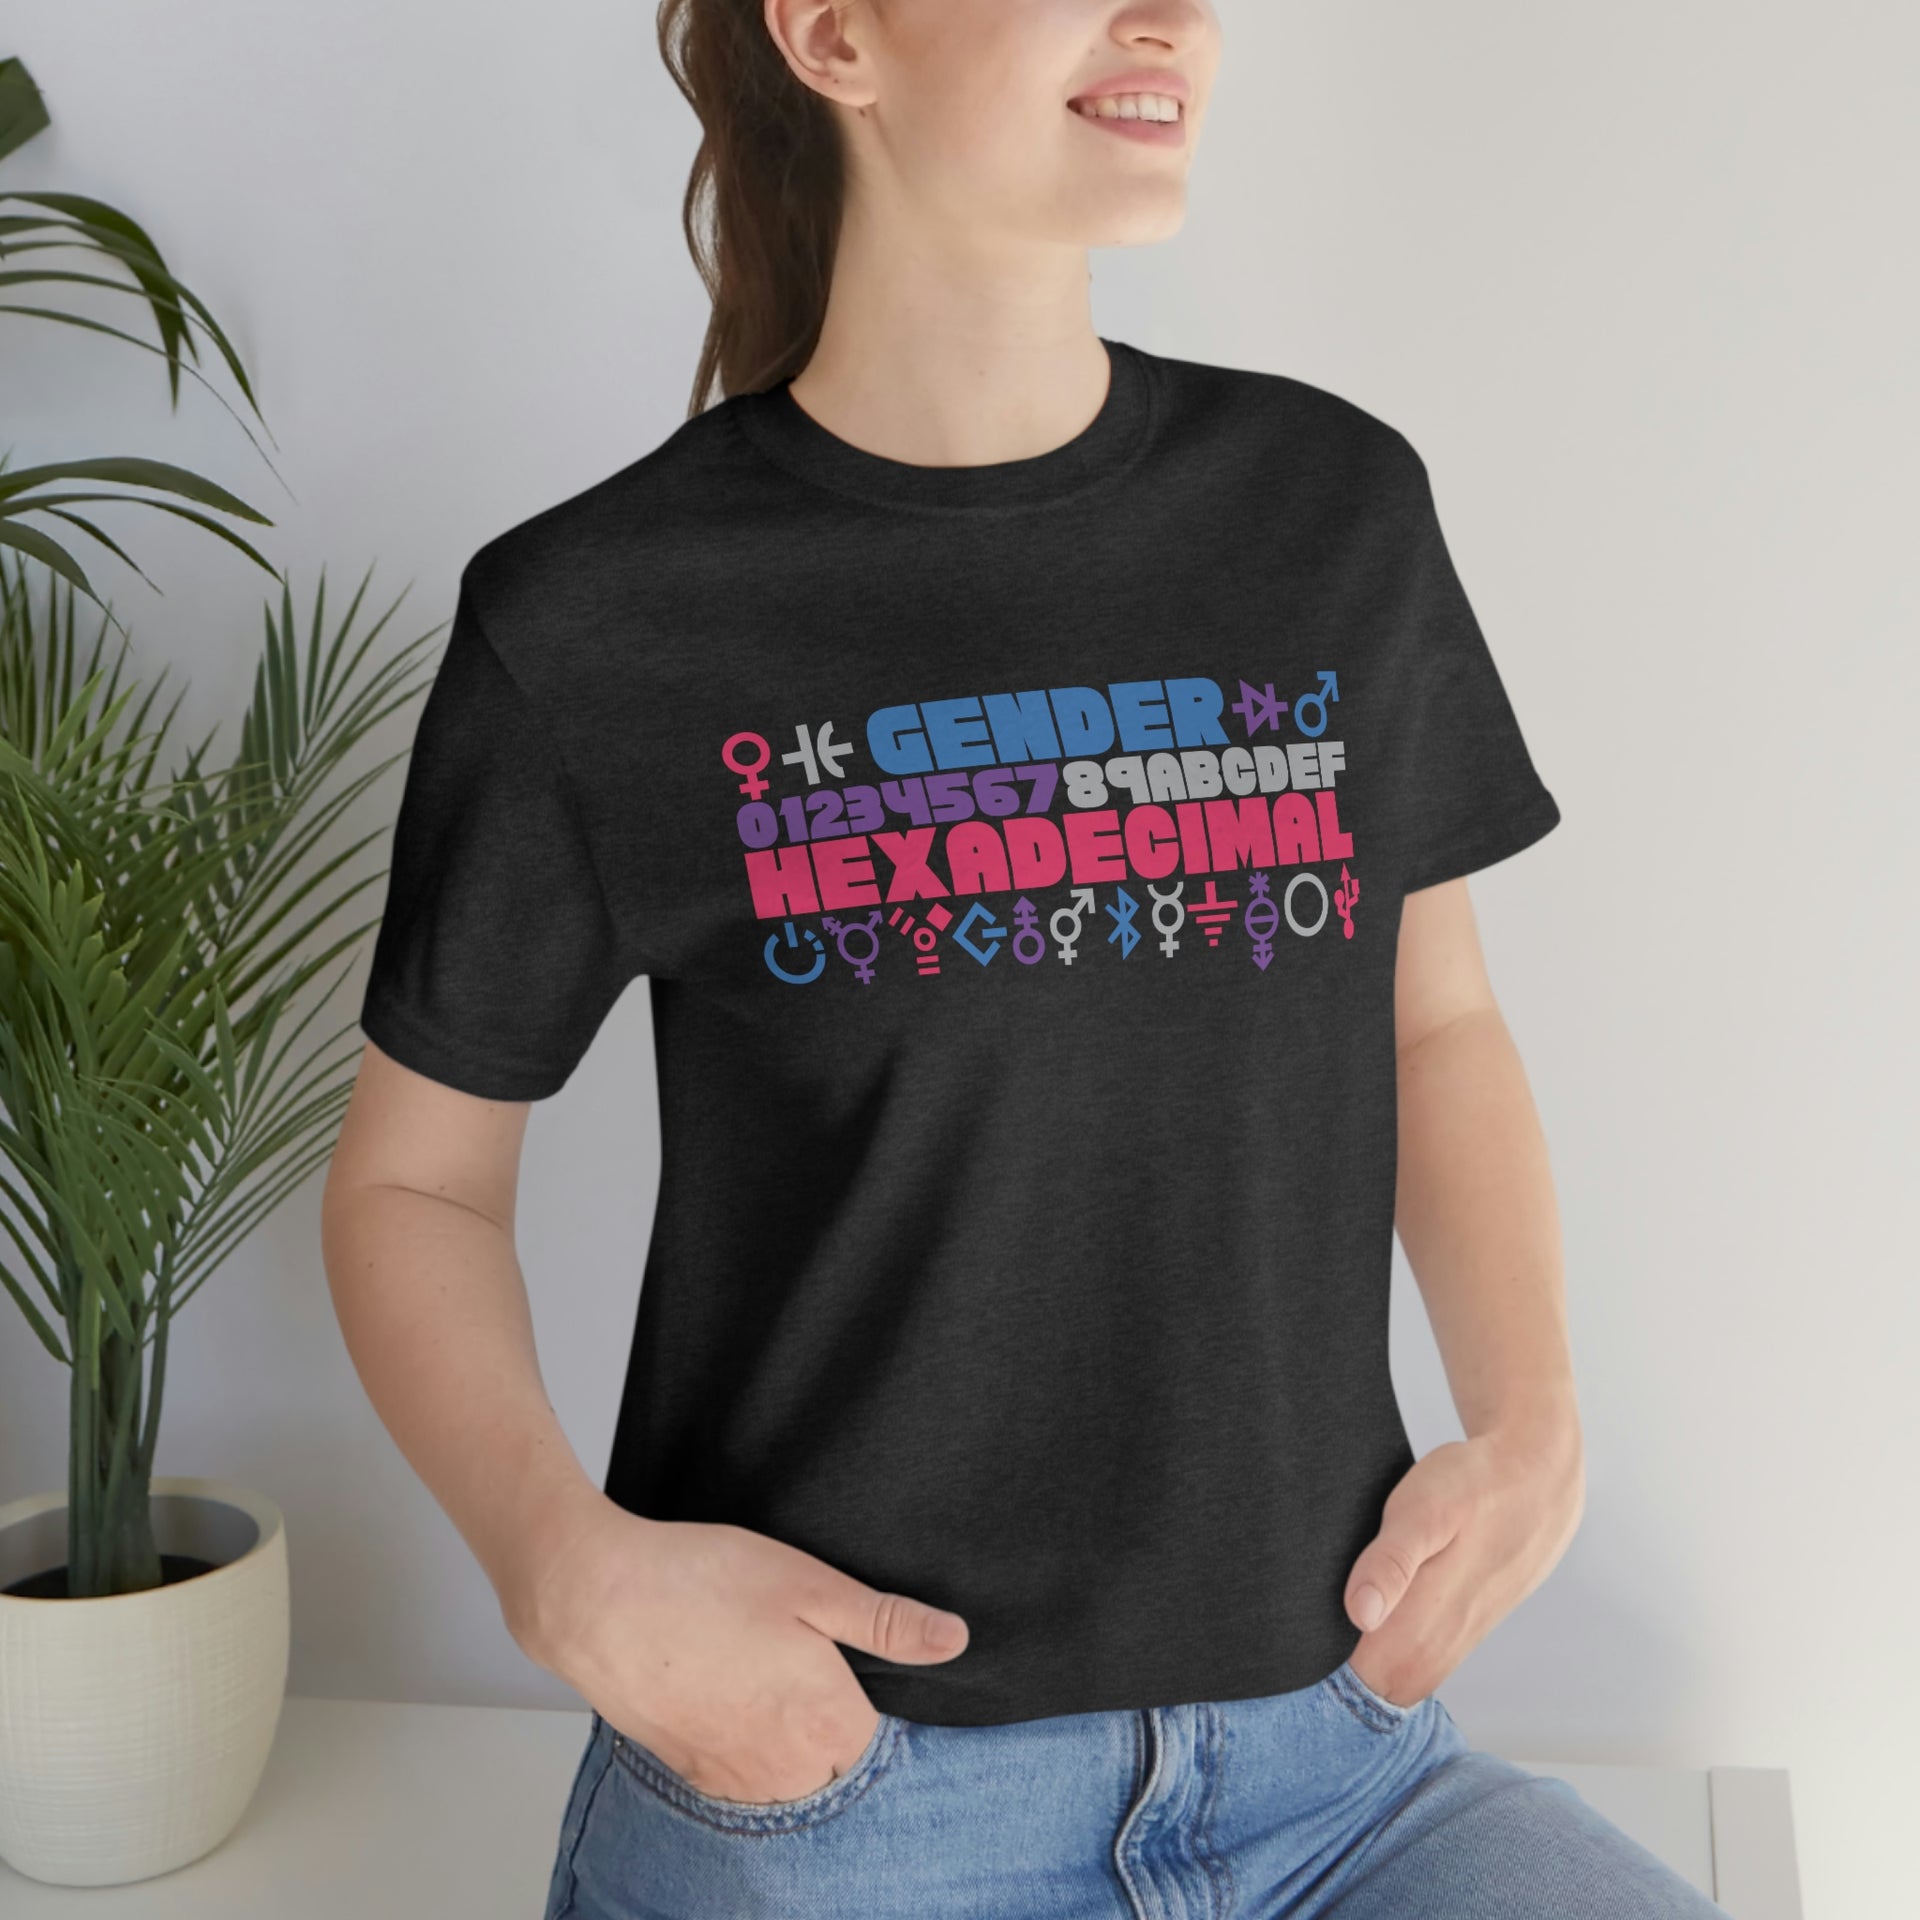 Gender Hexadecimal (T-Shirt)